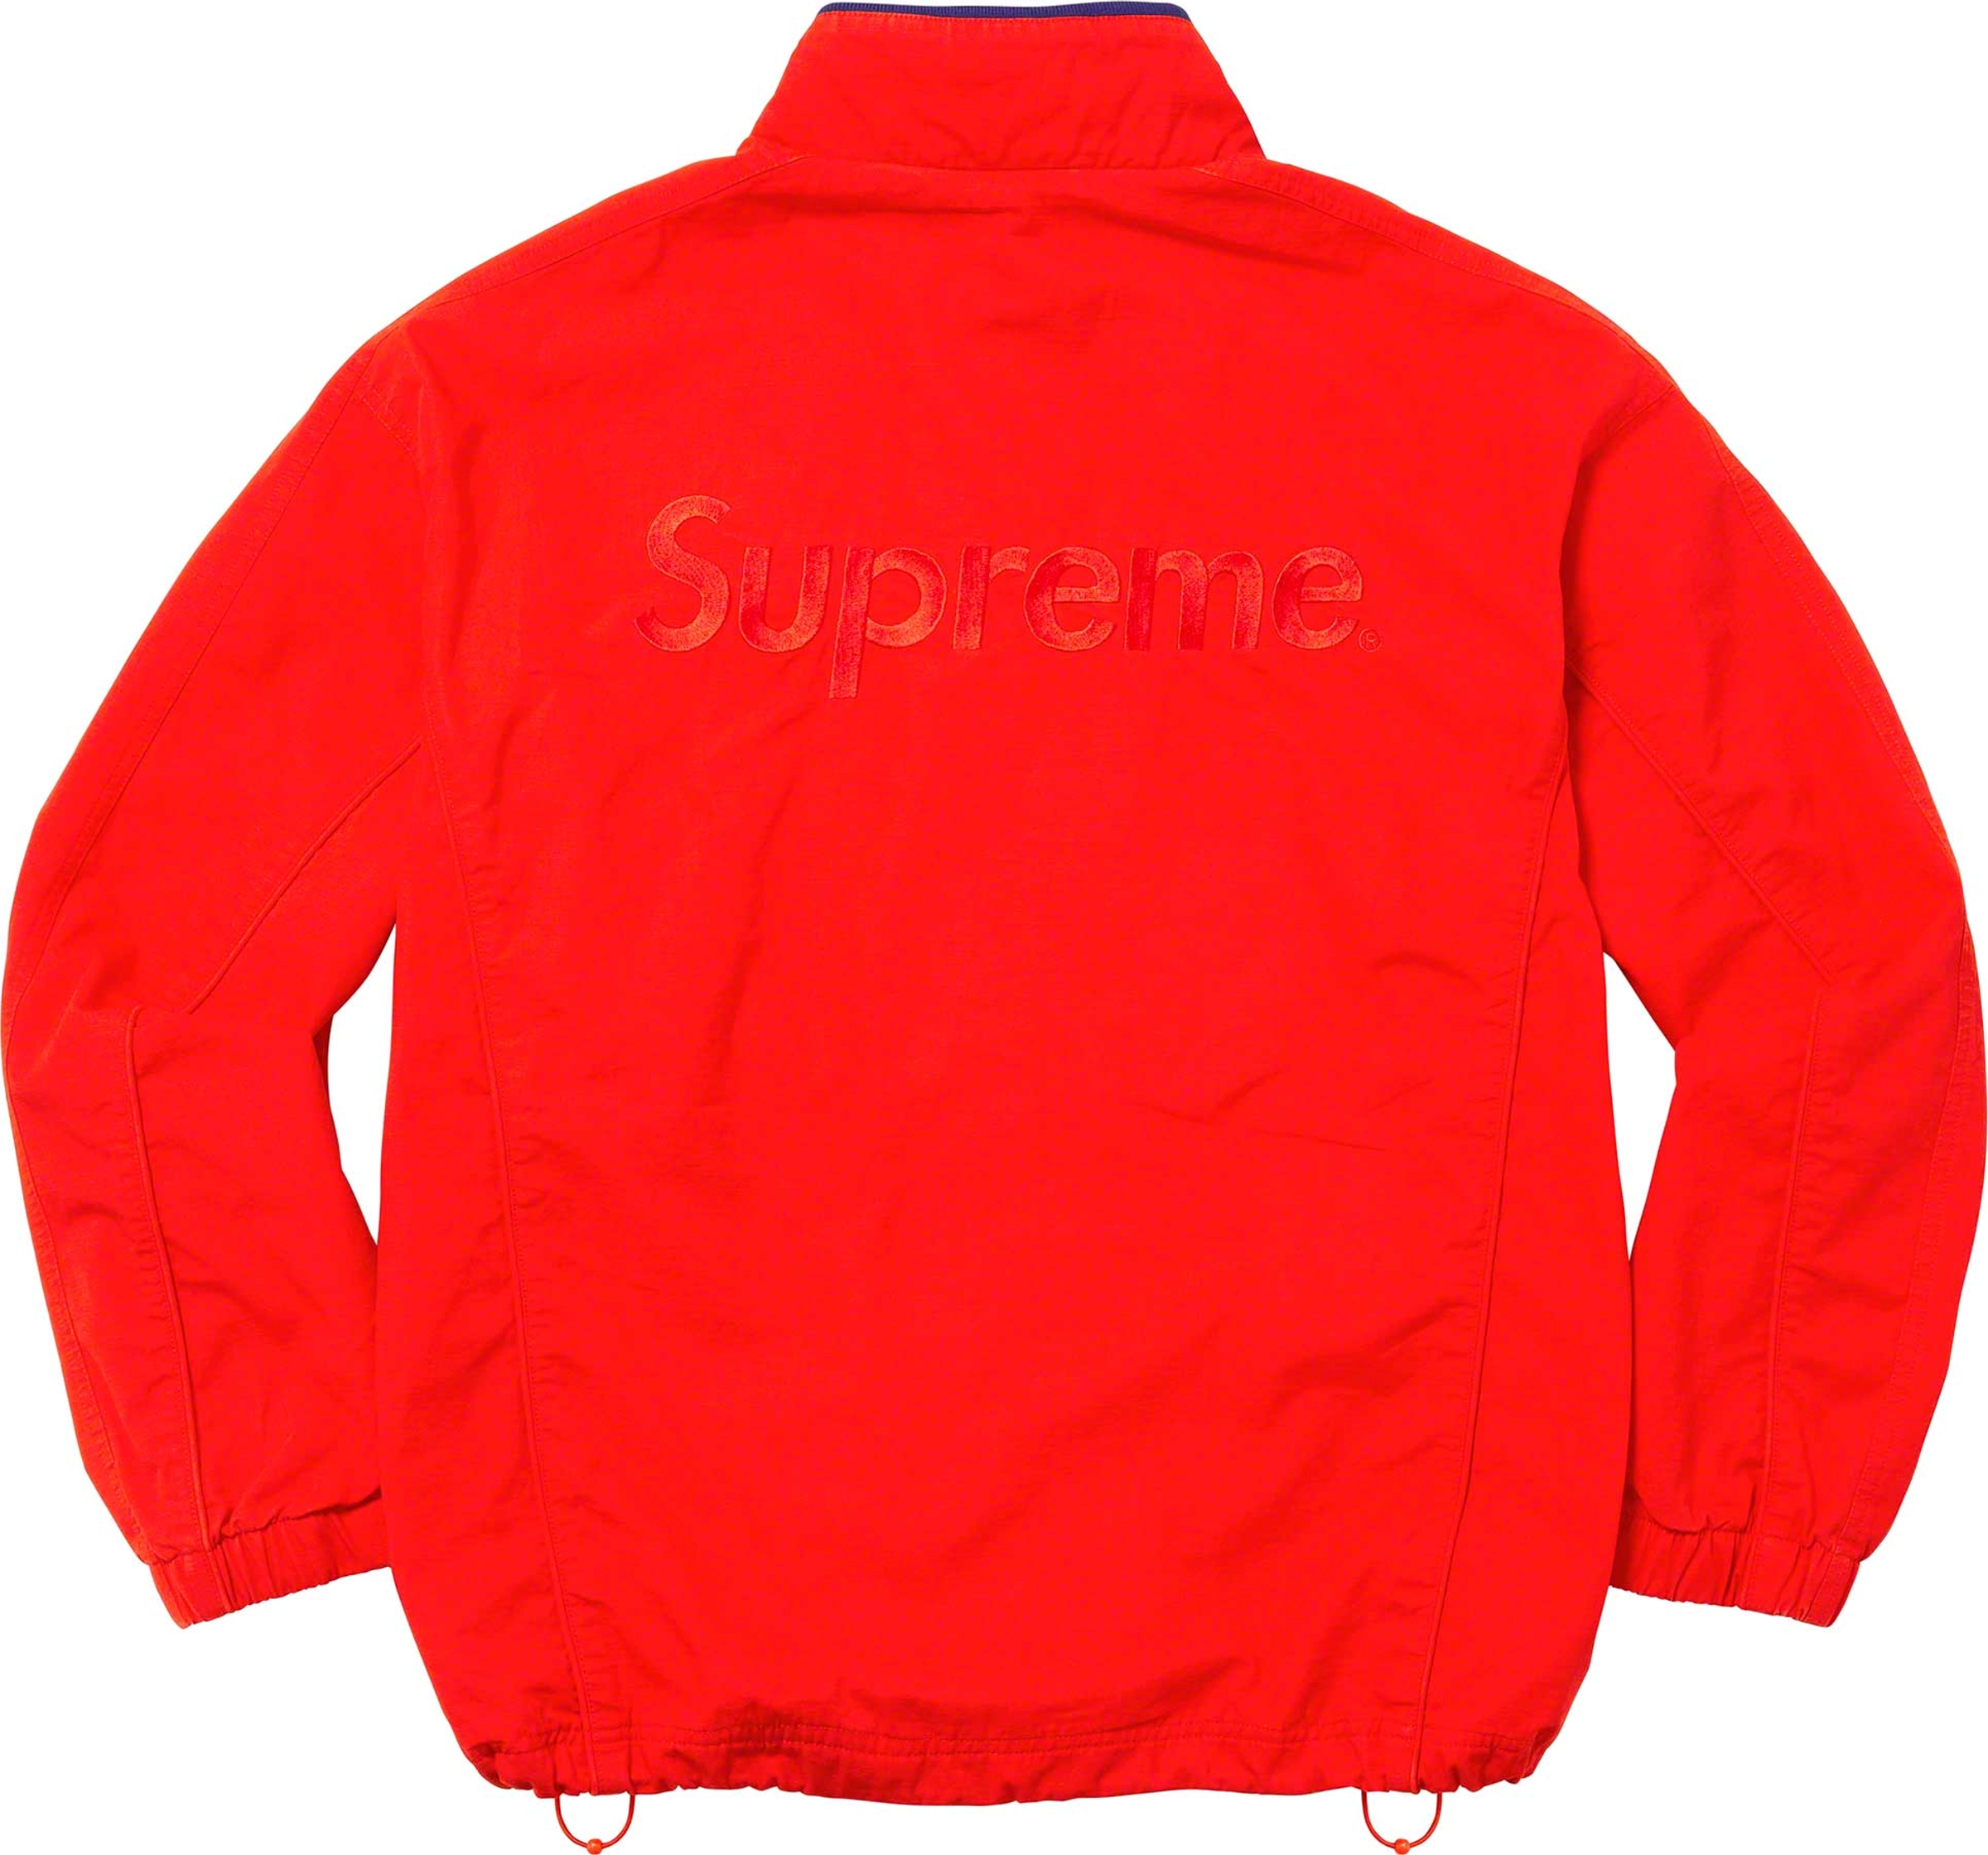 Supreme Supreme®/Umbro Cotton Ripstop Track Jacket